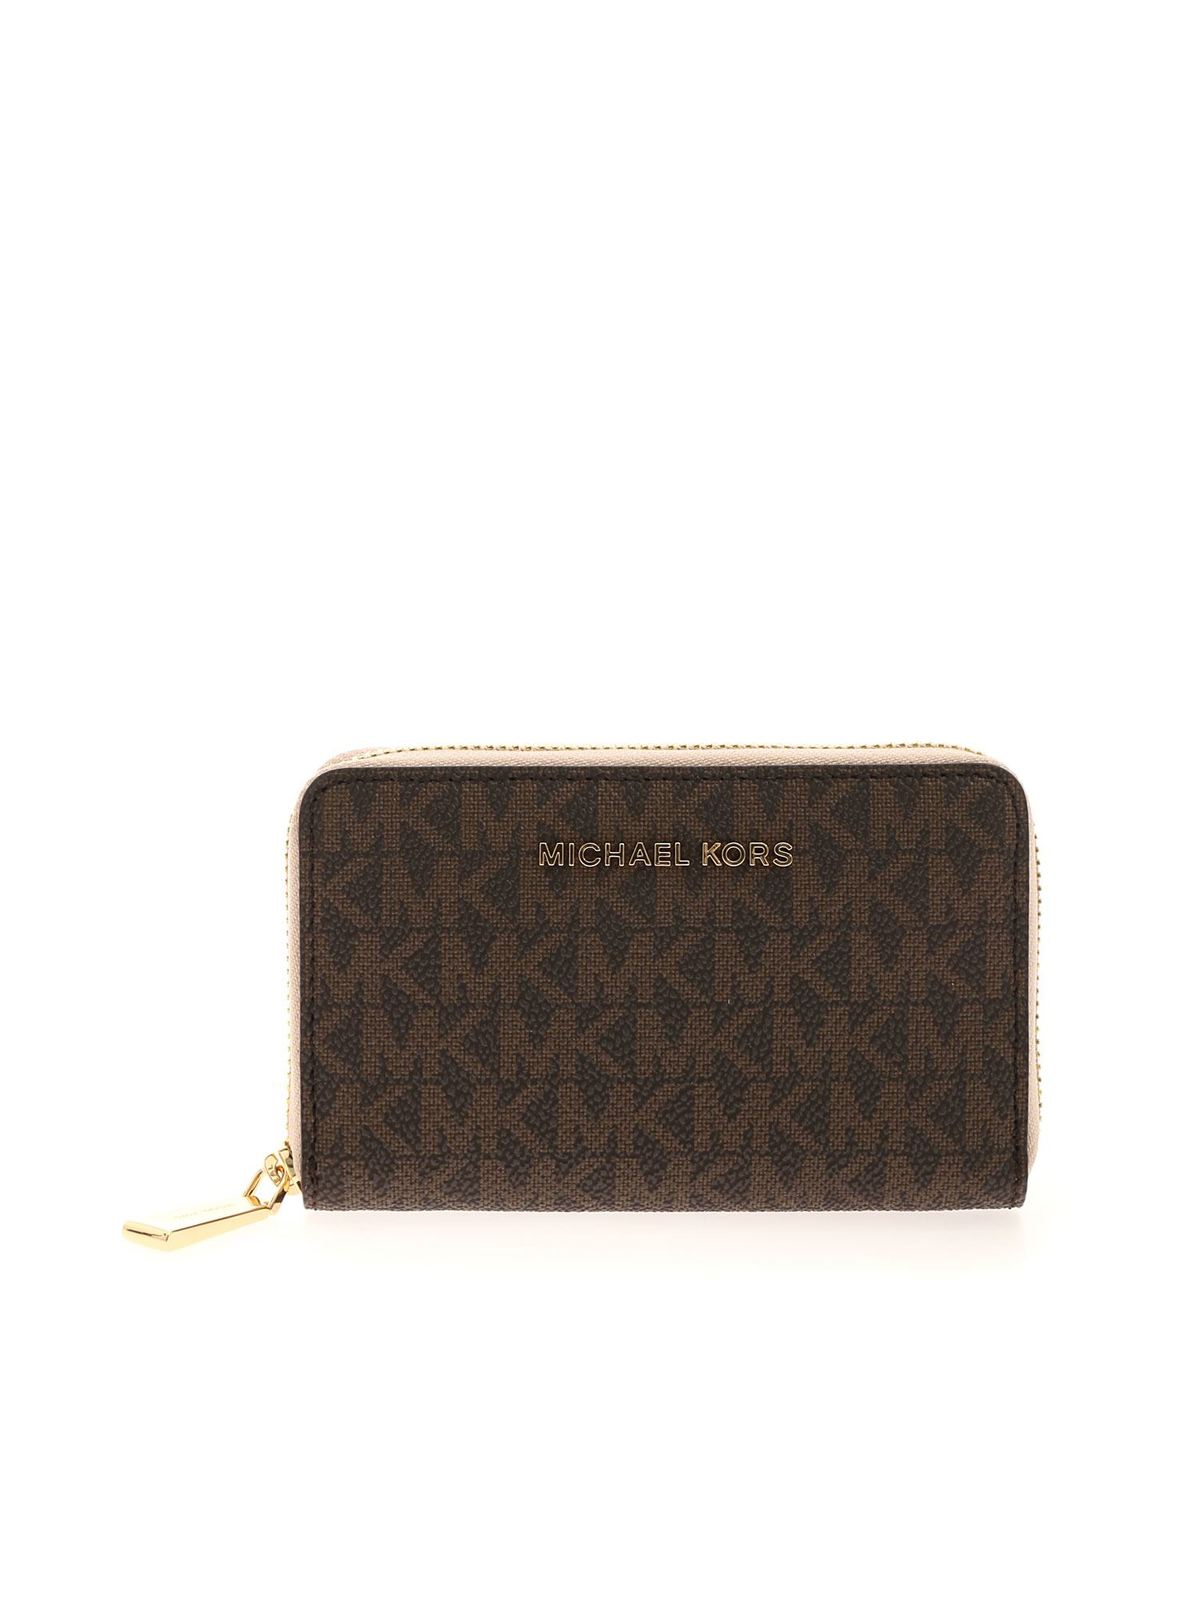 purses Michael Kors - Monogram wallet 